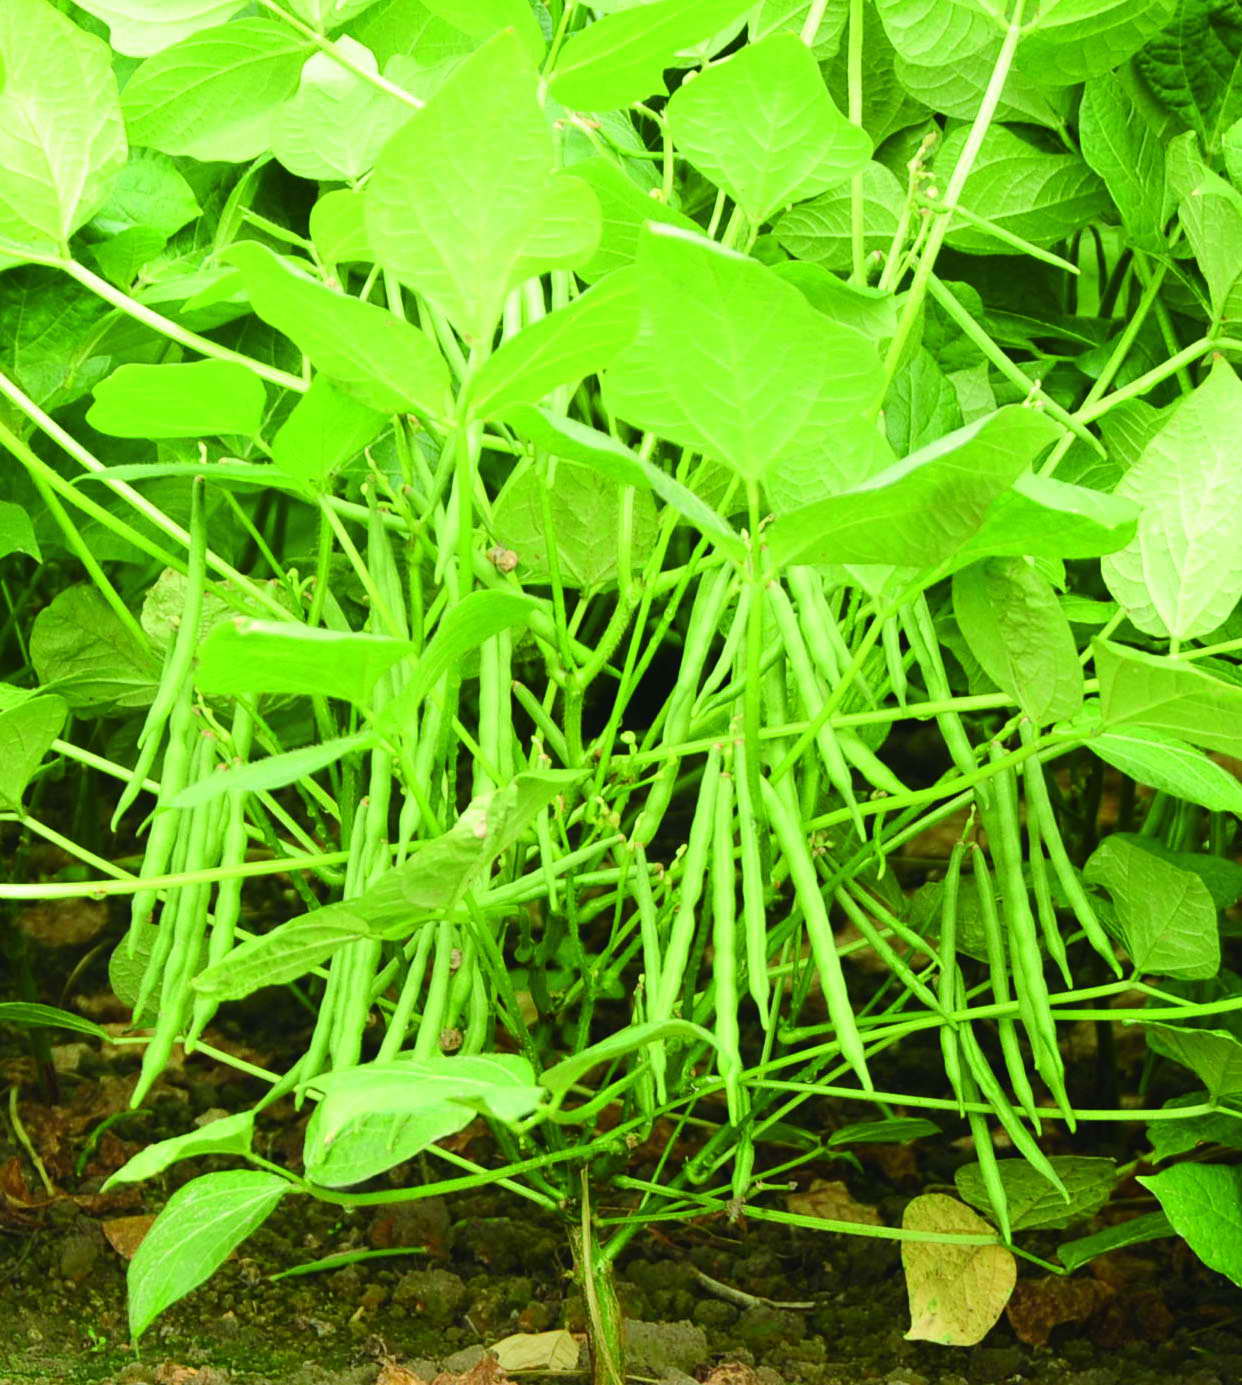 一株紅豆可以長出一百多個豆莢。  A single adzuki plant can grow more than a hundred pods.